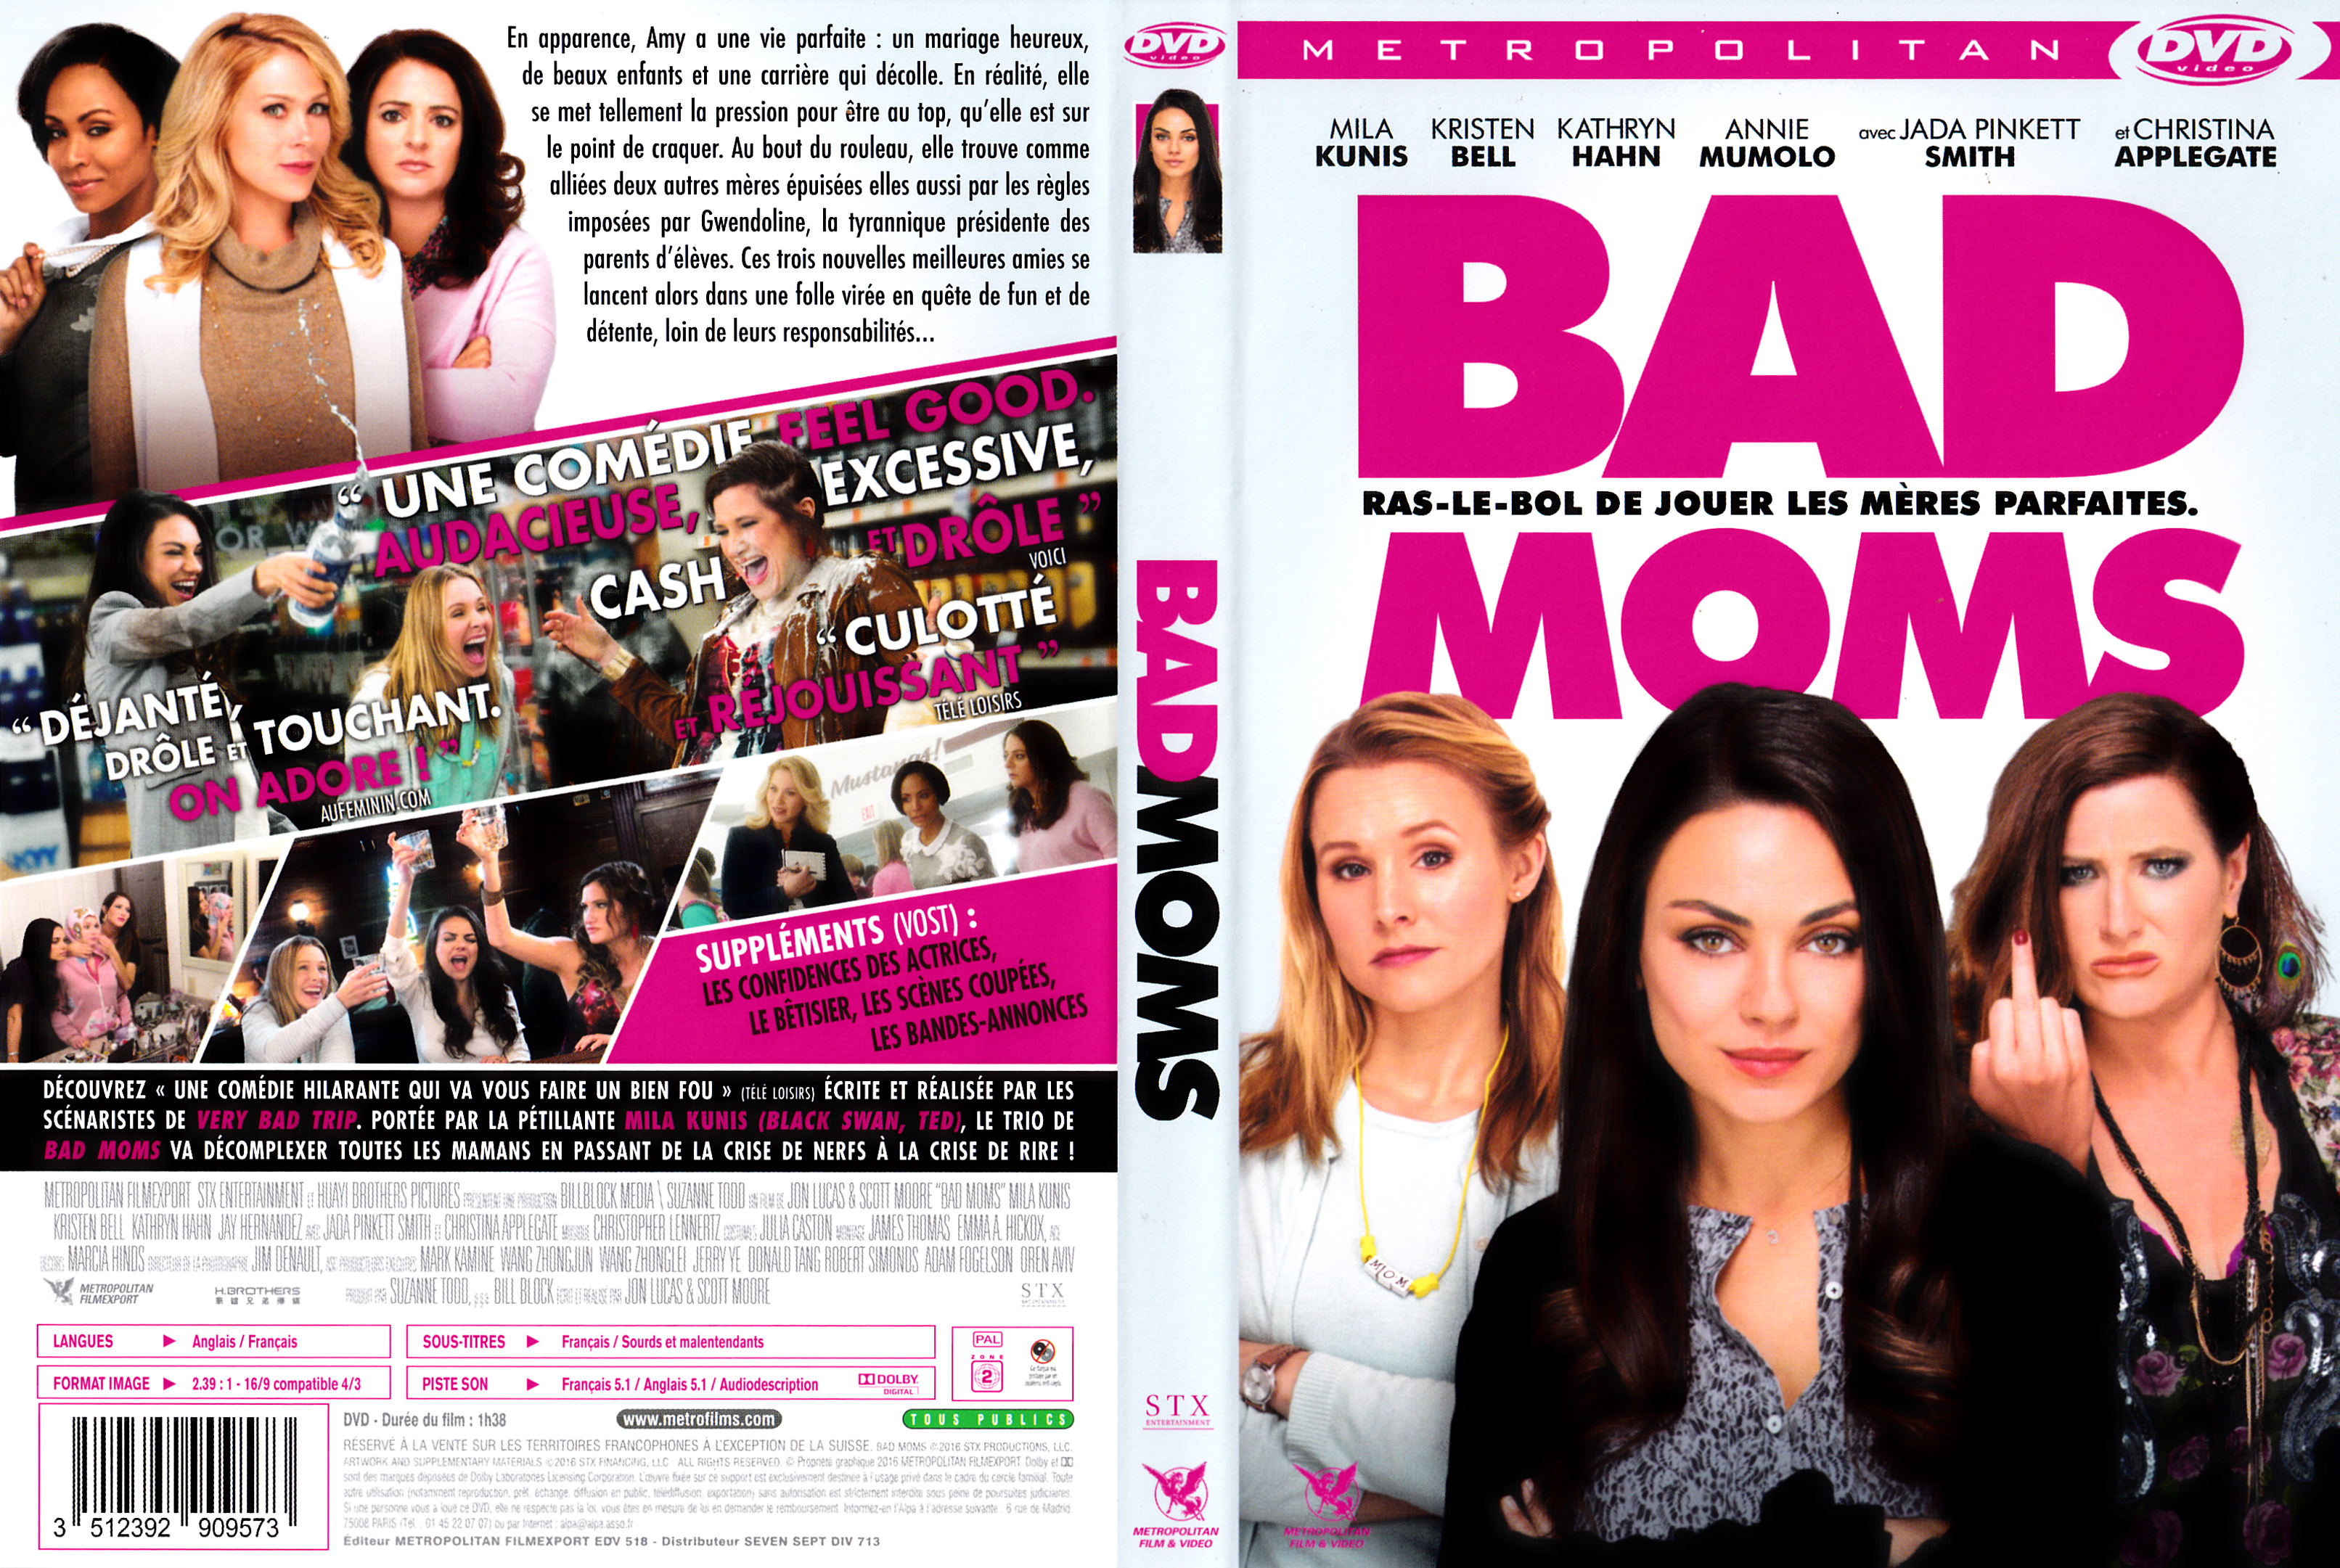 Jaquette DVD Bad moms